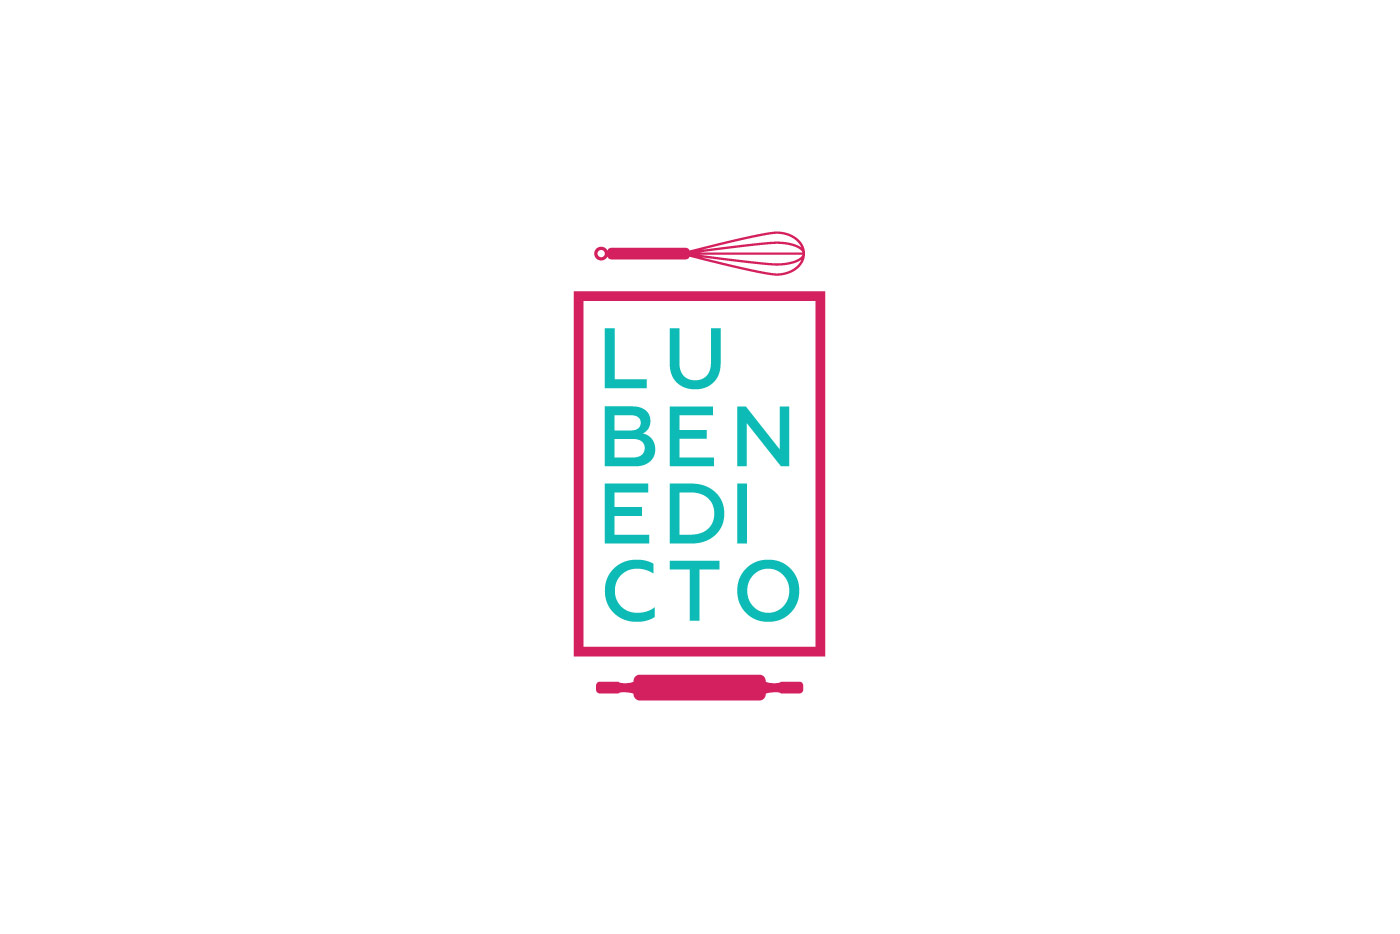 Lu Benedicto Chef Confeiteira - Identidade Visual